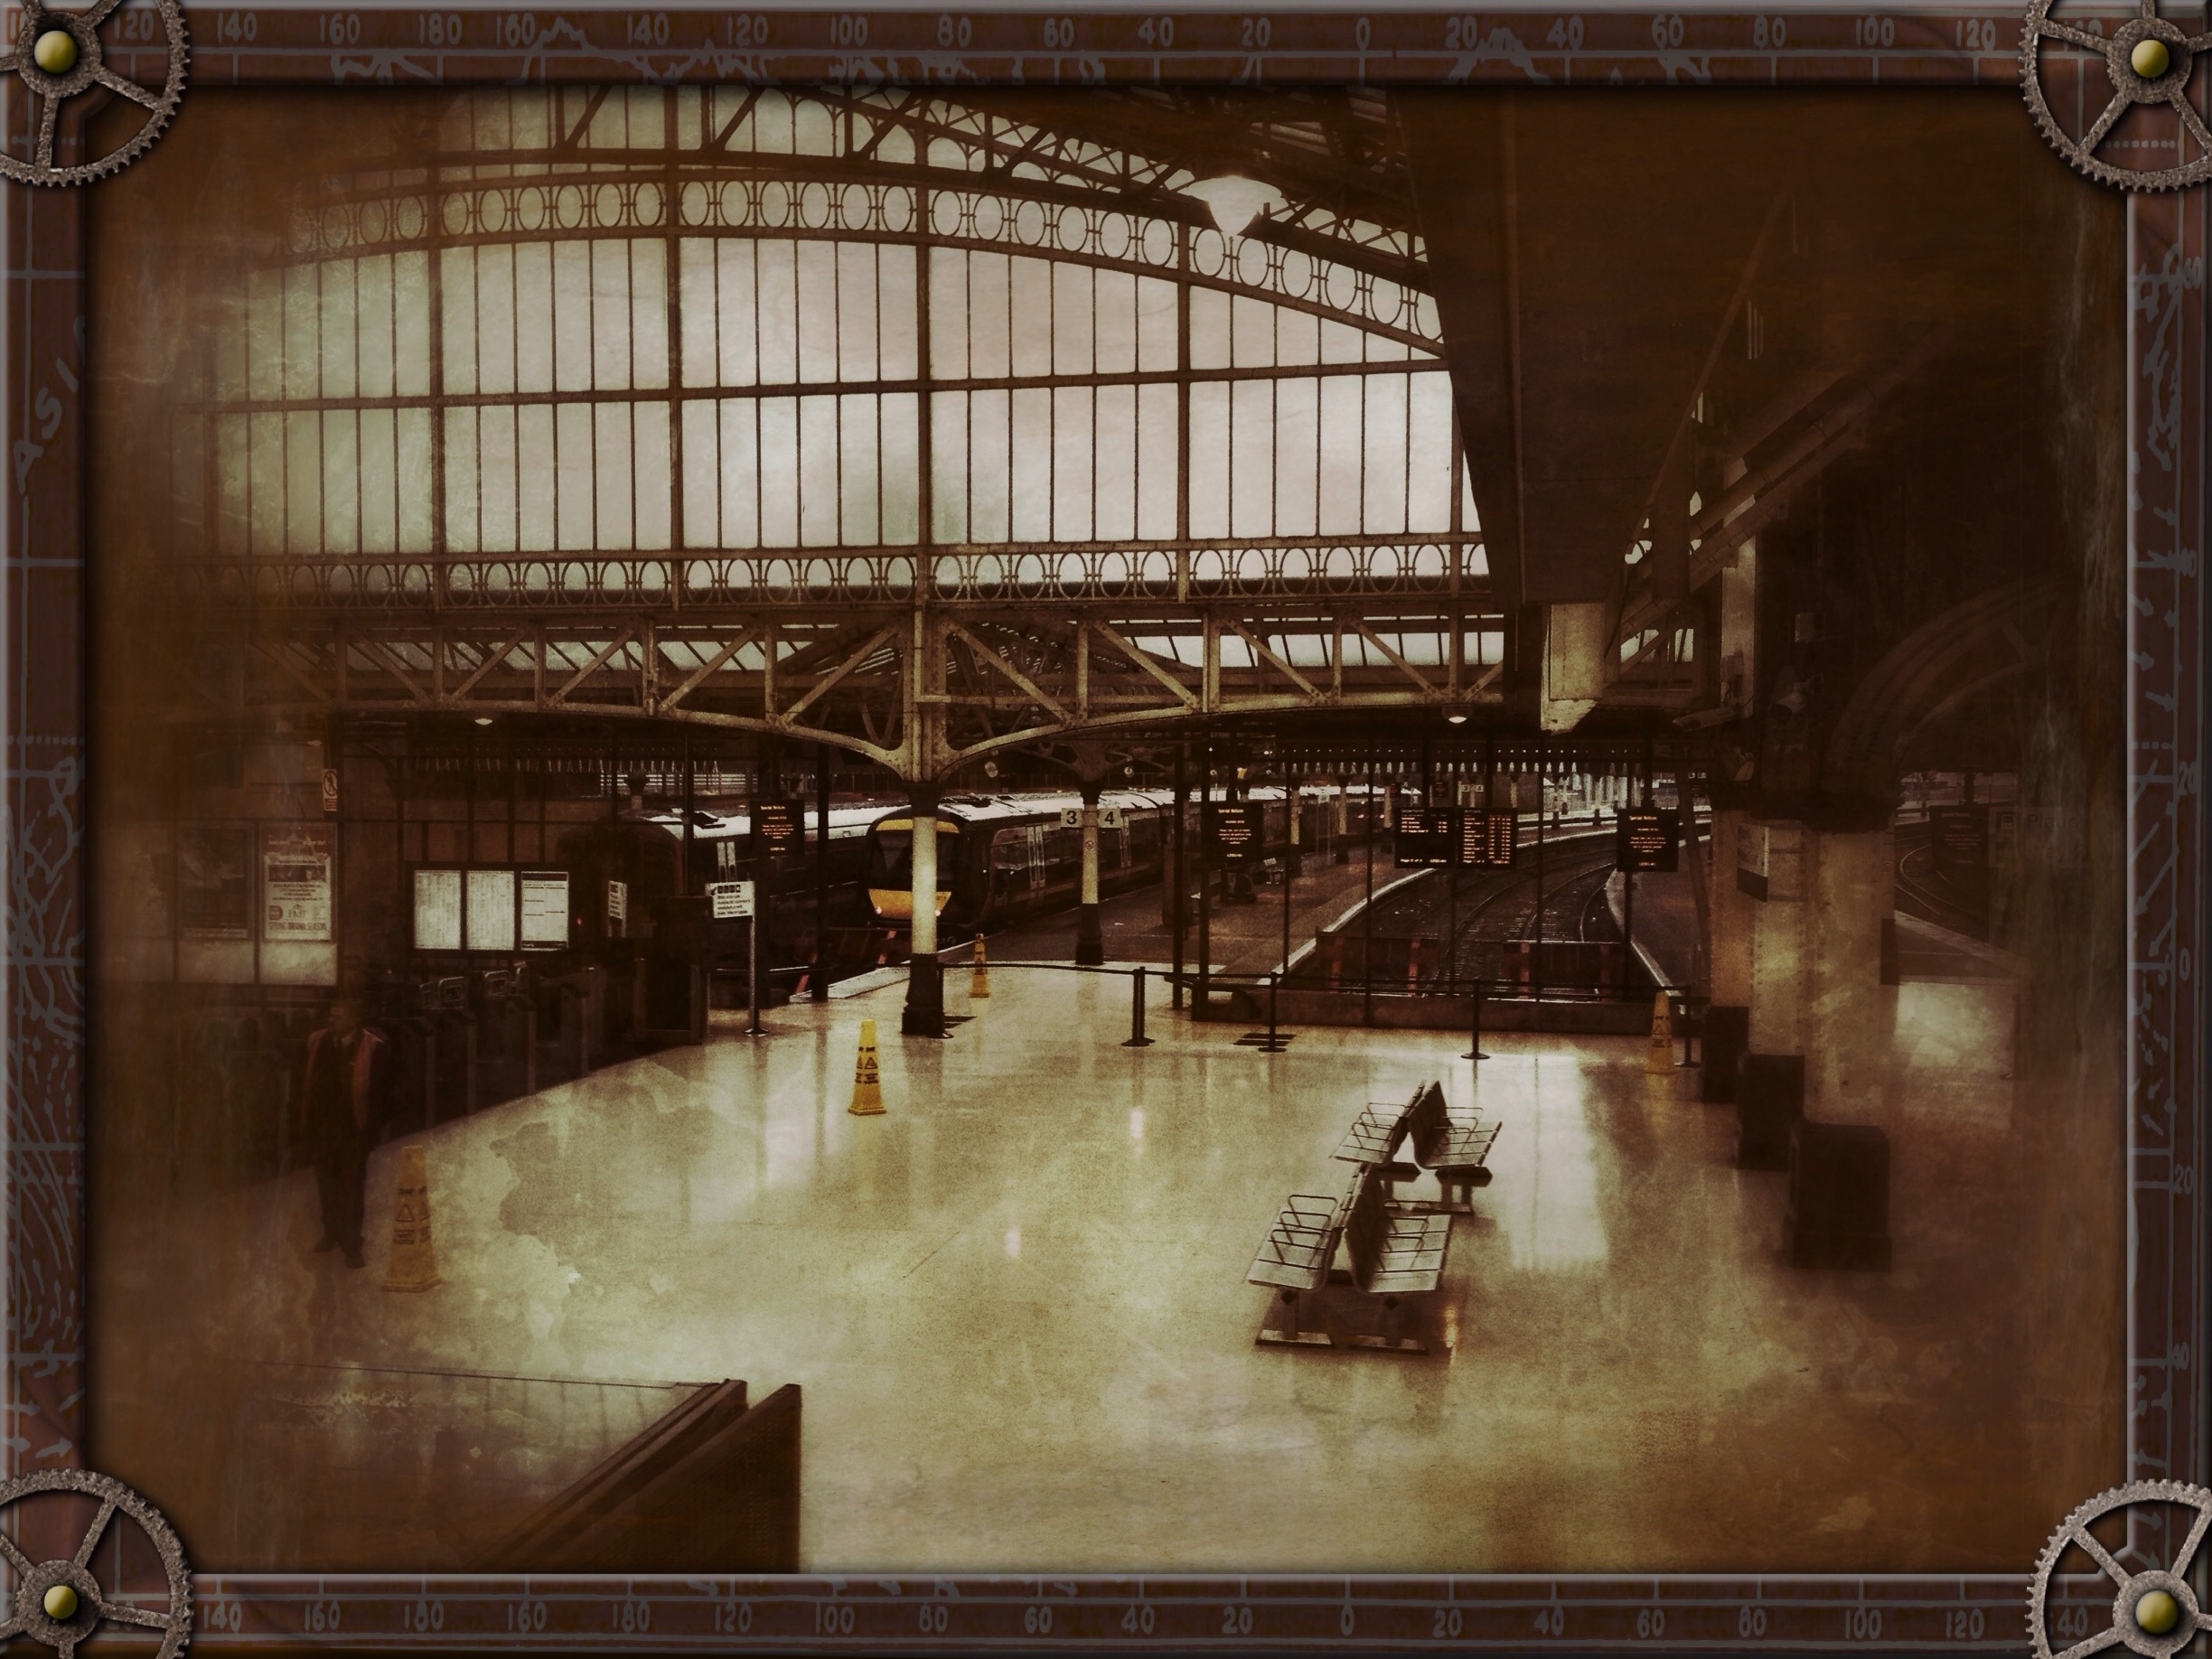 Photograph: Station